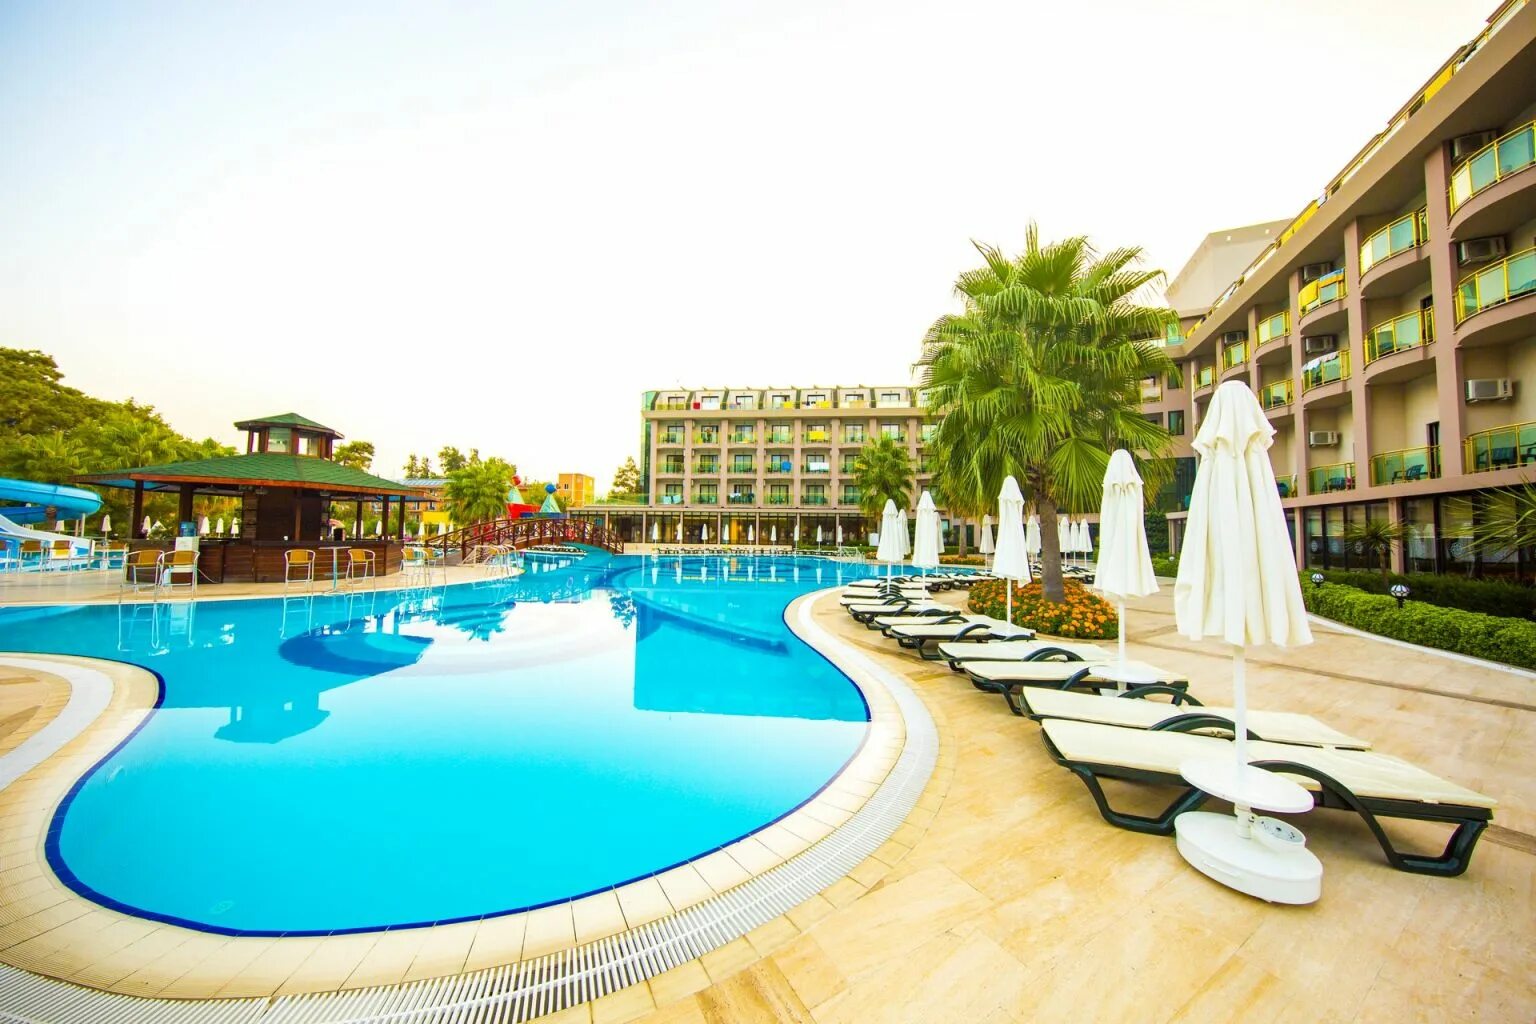 Отель Eldar Resort 4*. Отель Eldar Resort 4 Турция Кемер. Eldar garden resort hotel 4 турция